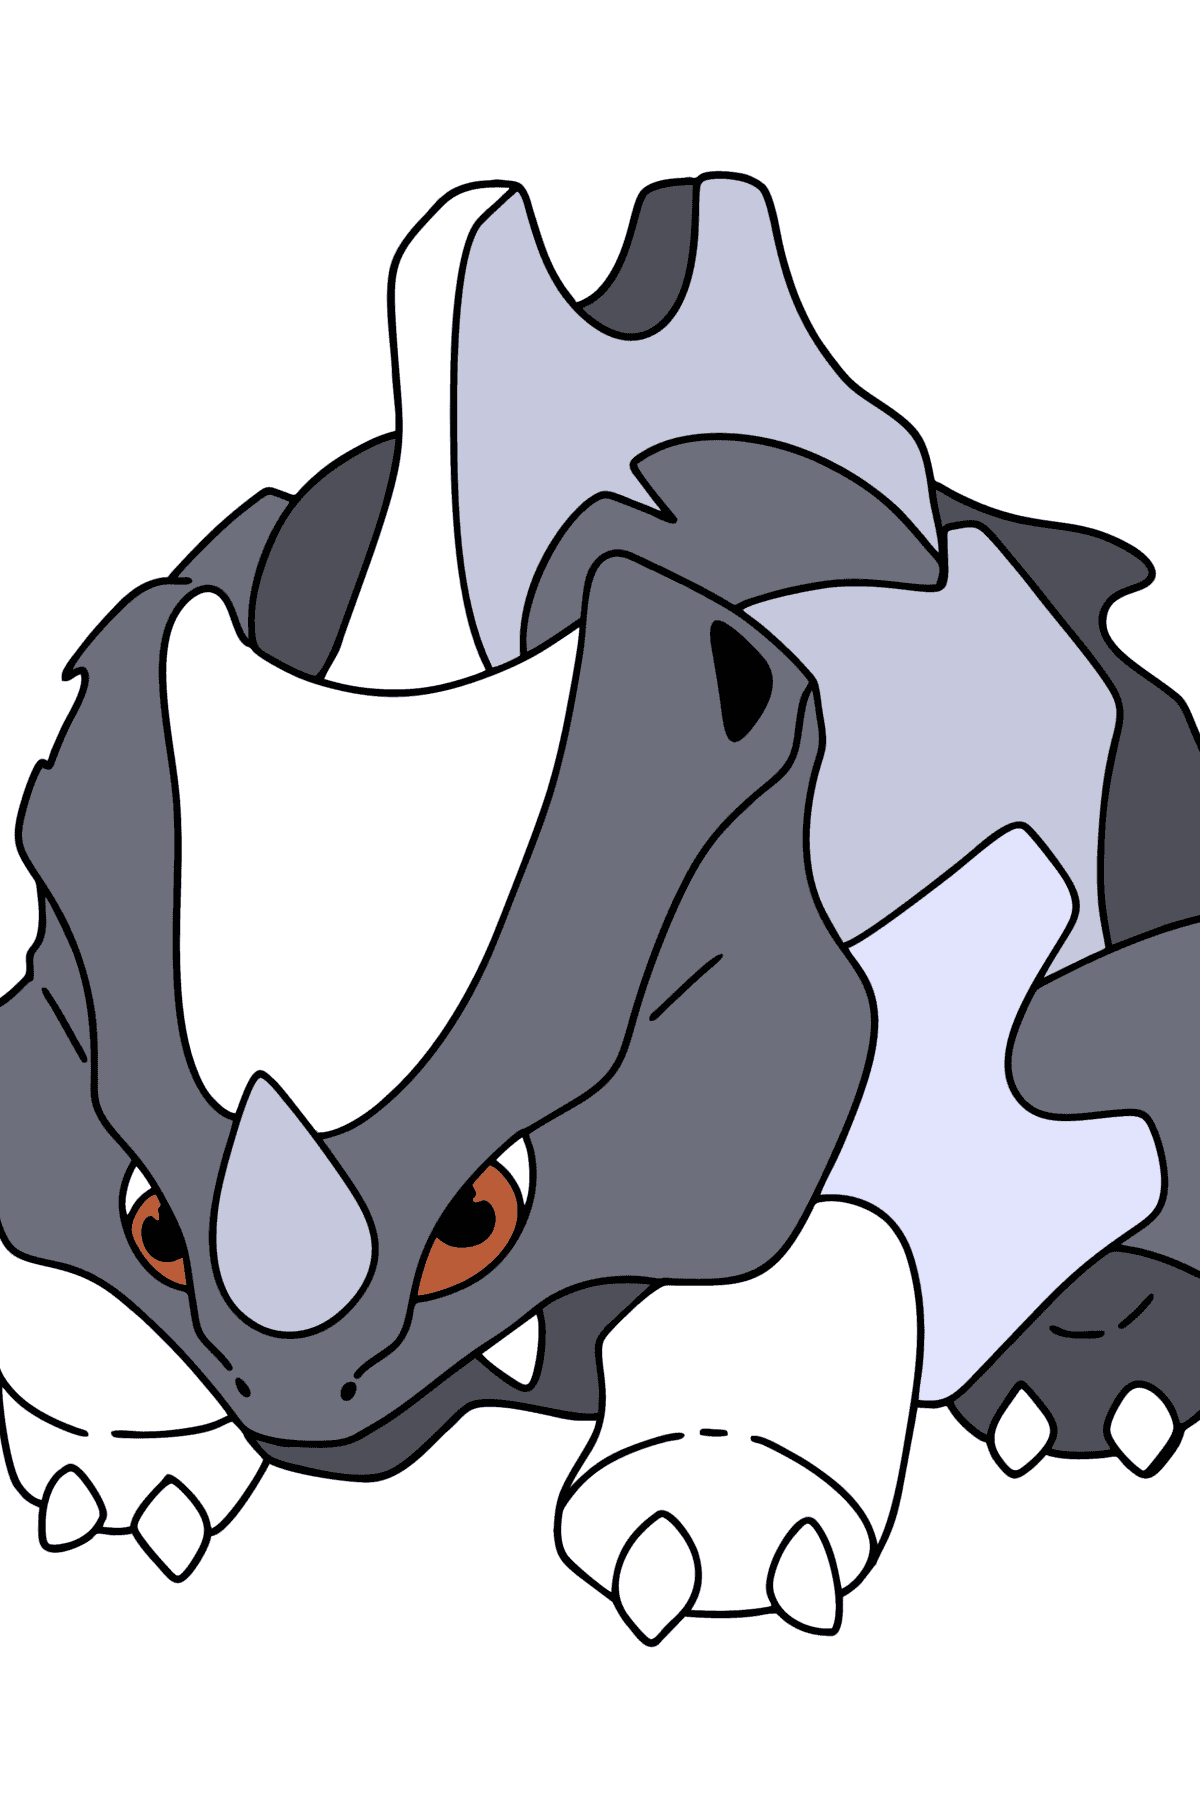 Målarbild Pokémon Go Rhyhorn - Målarbilder För barn